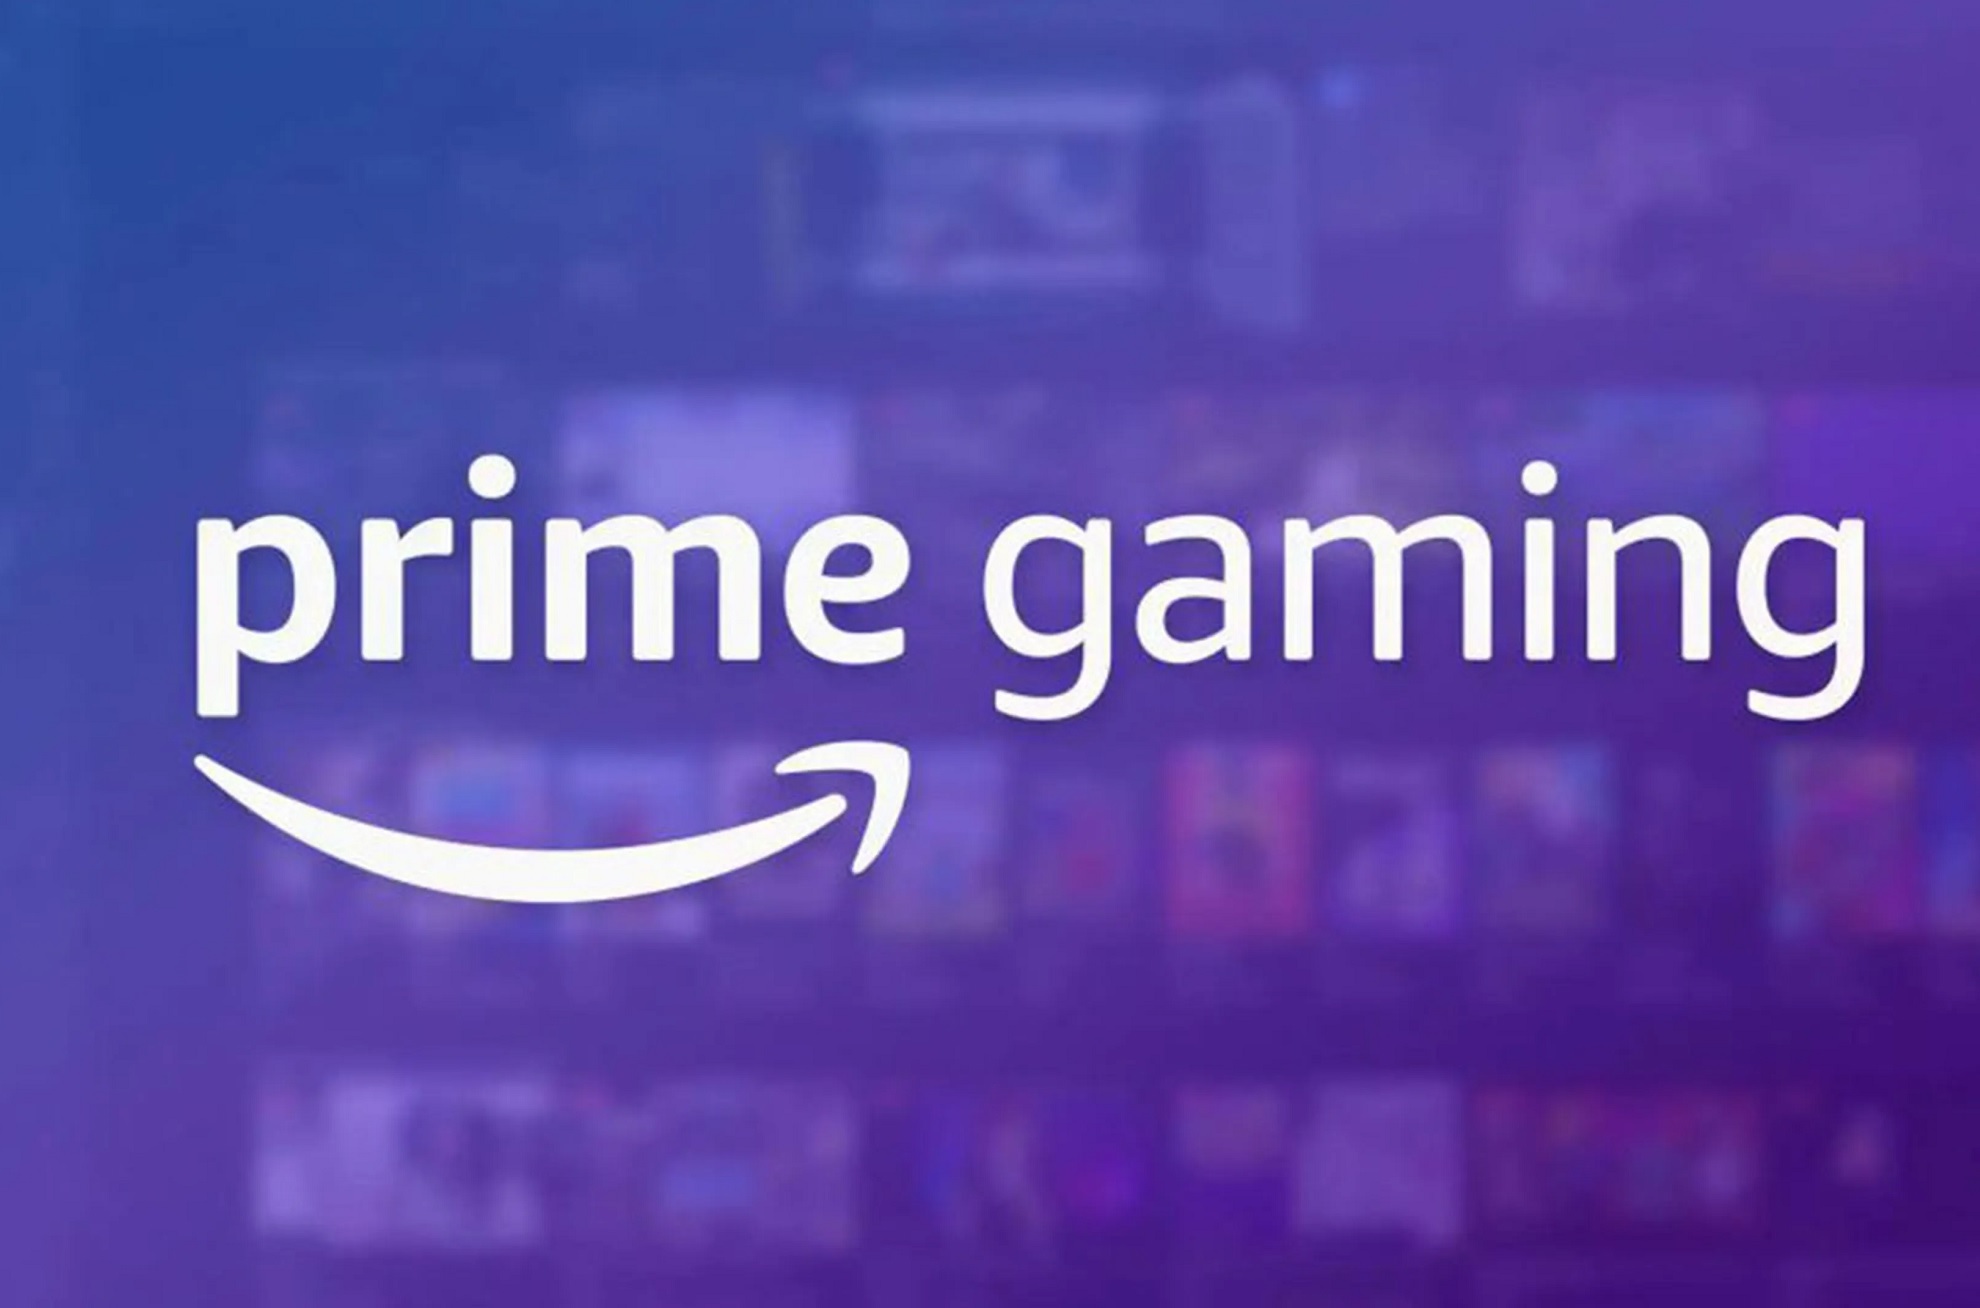  Prime Gaming de Amazon